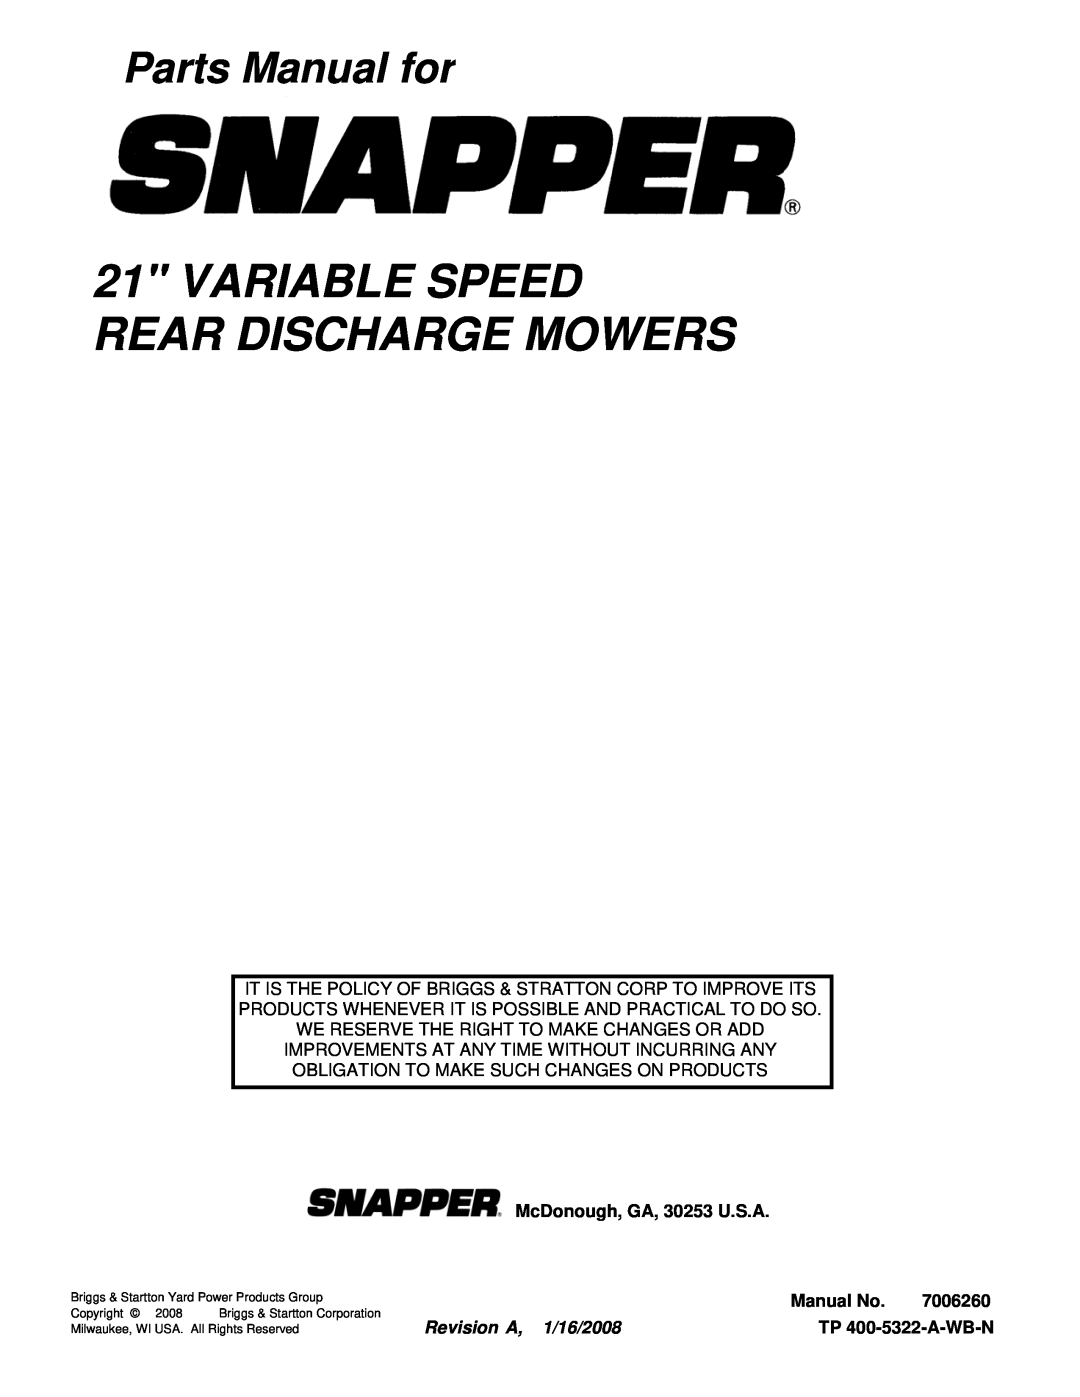 Snapper SPV21675E Variable Speed Rear Discharge Mowers, Parts Manual for, McDonough, GA, 30253 U.S.A, Manual No, 7006260 